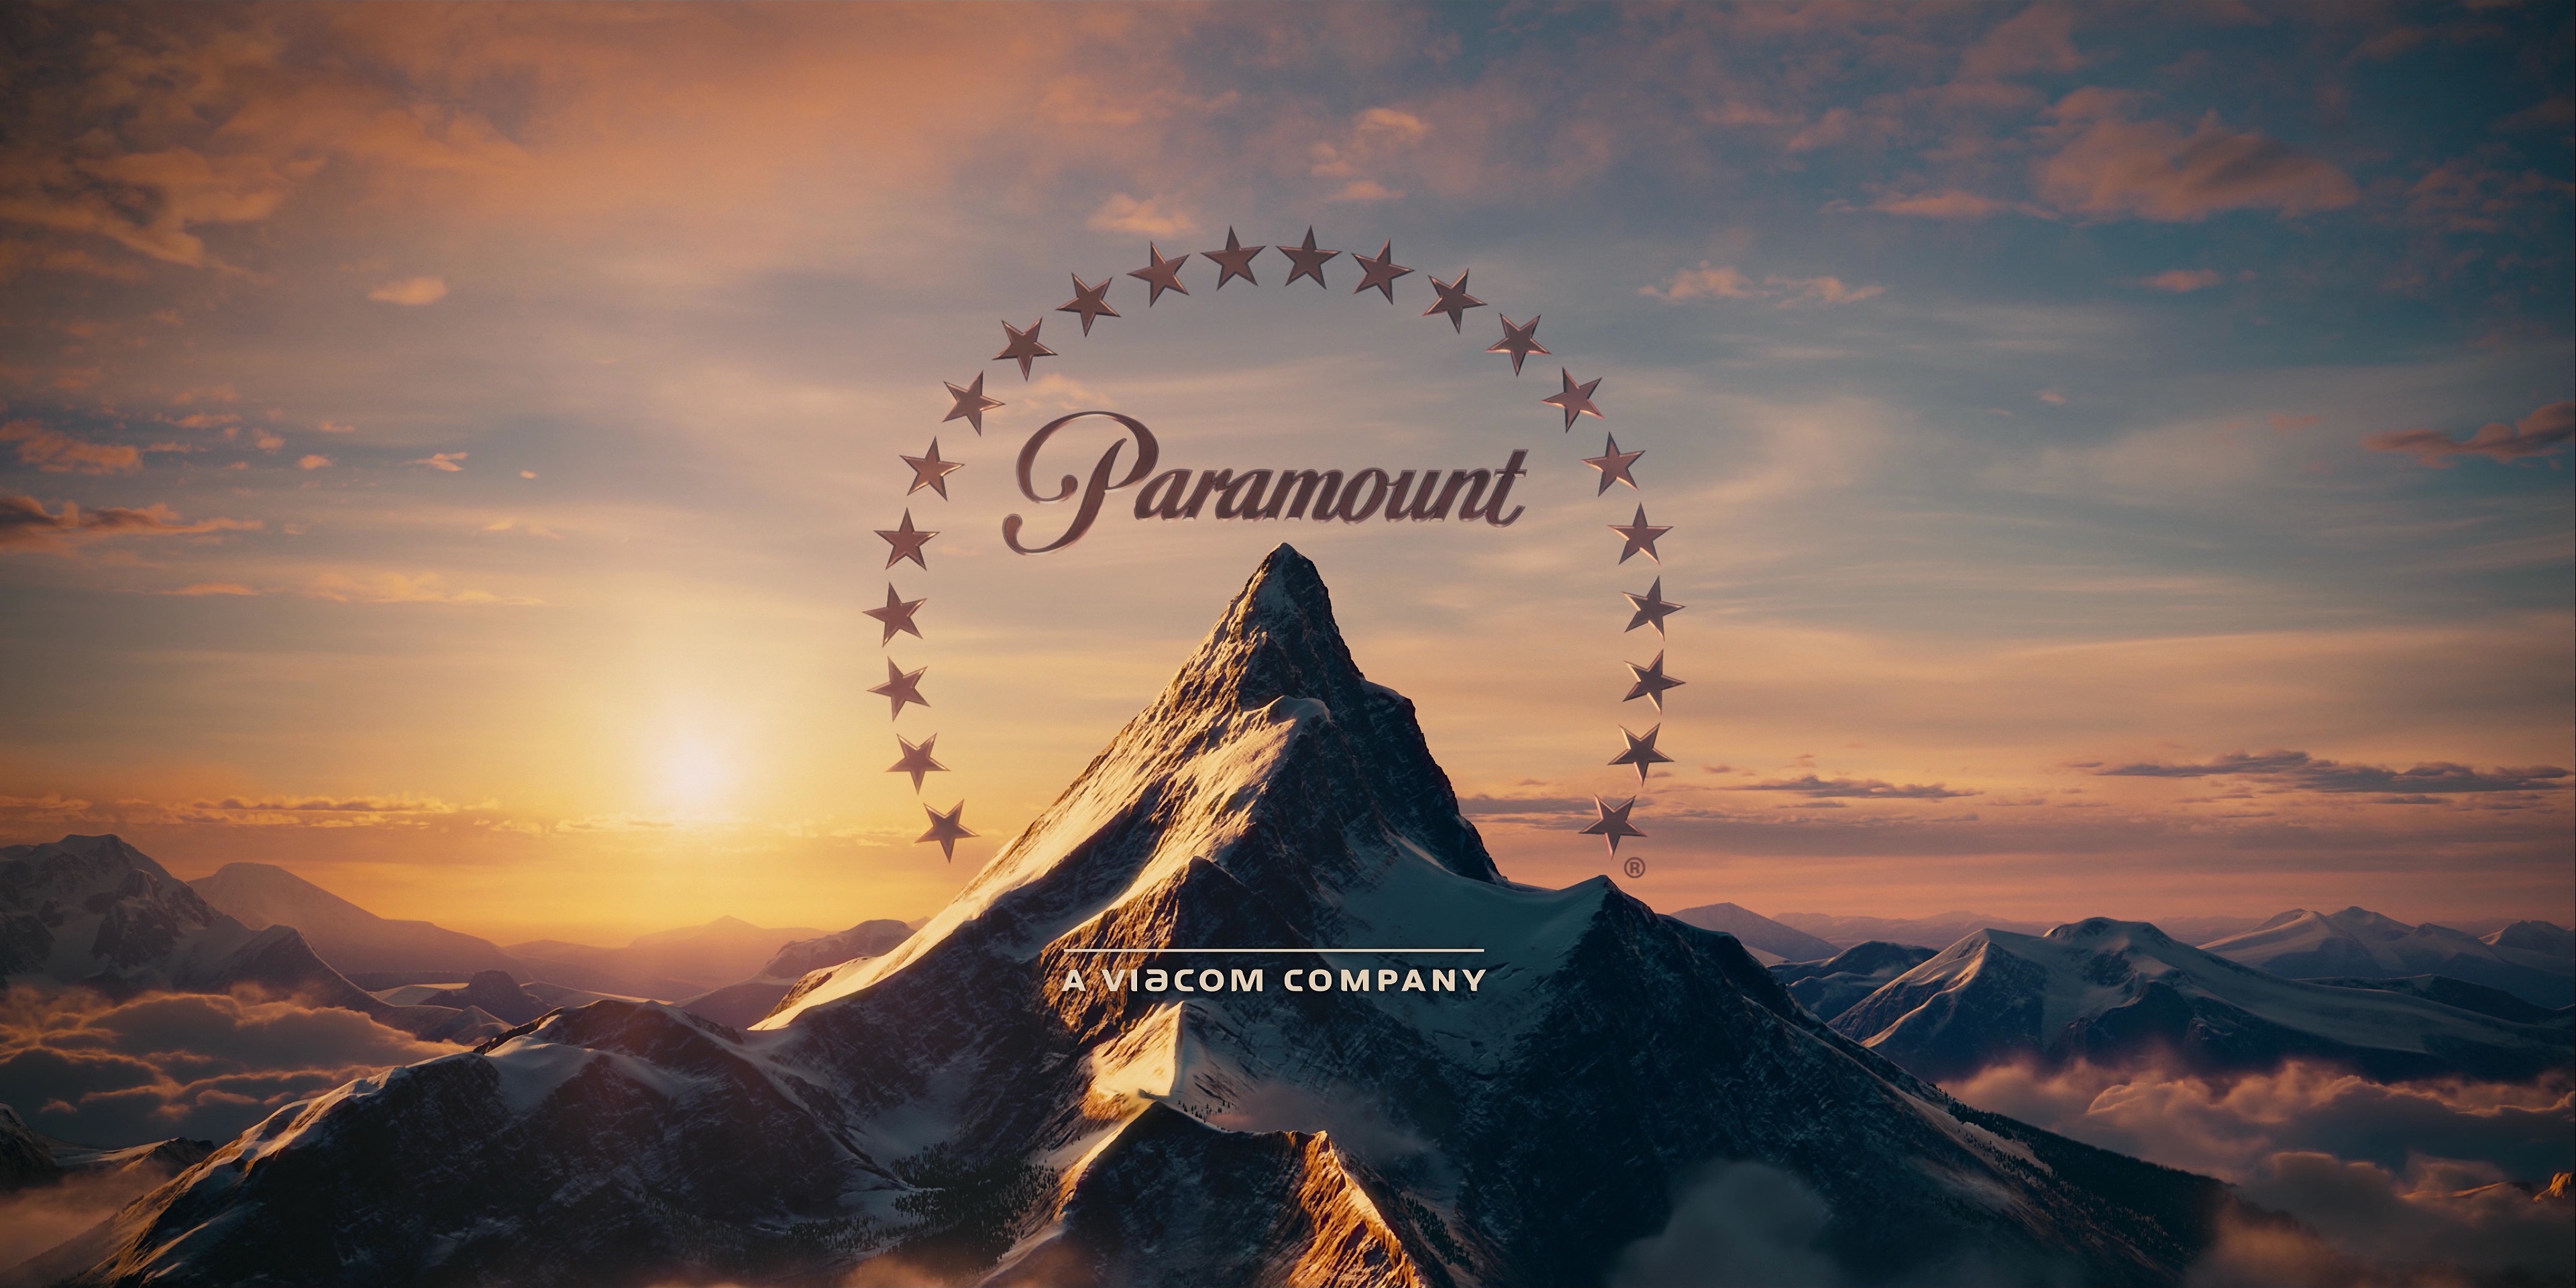 Paramount Television (2017) (2:1) (4K)